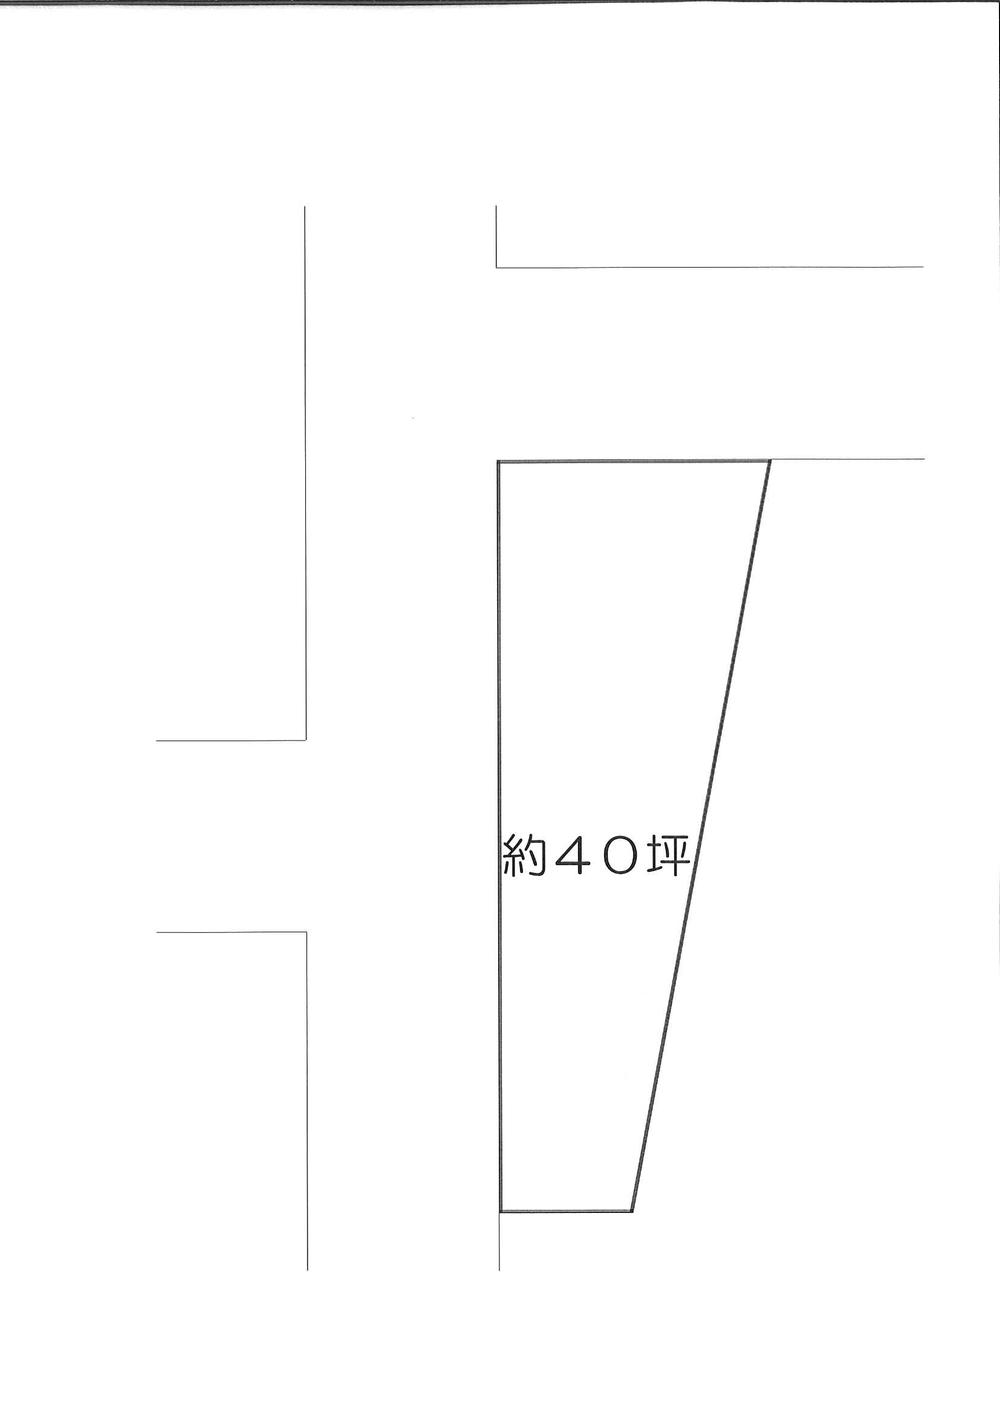 Compartment figure. Land price 7.6 million yen, Land area 132 sq m